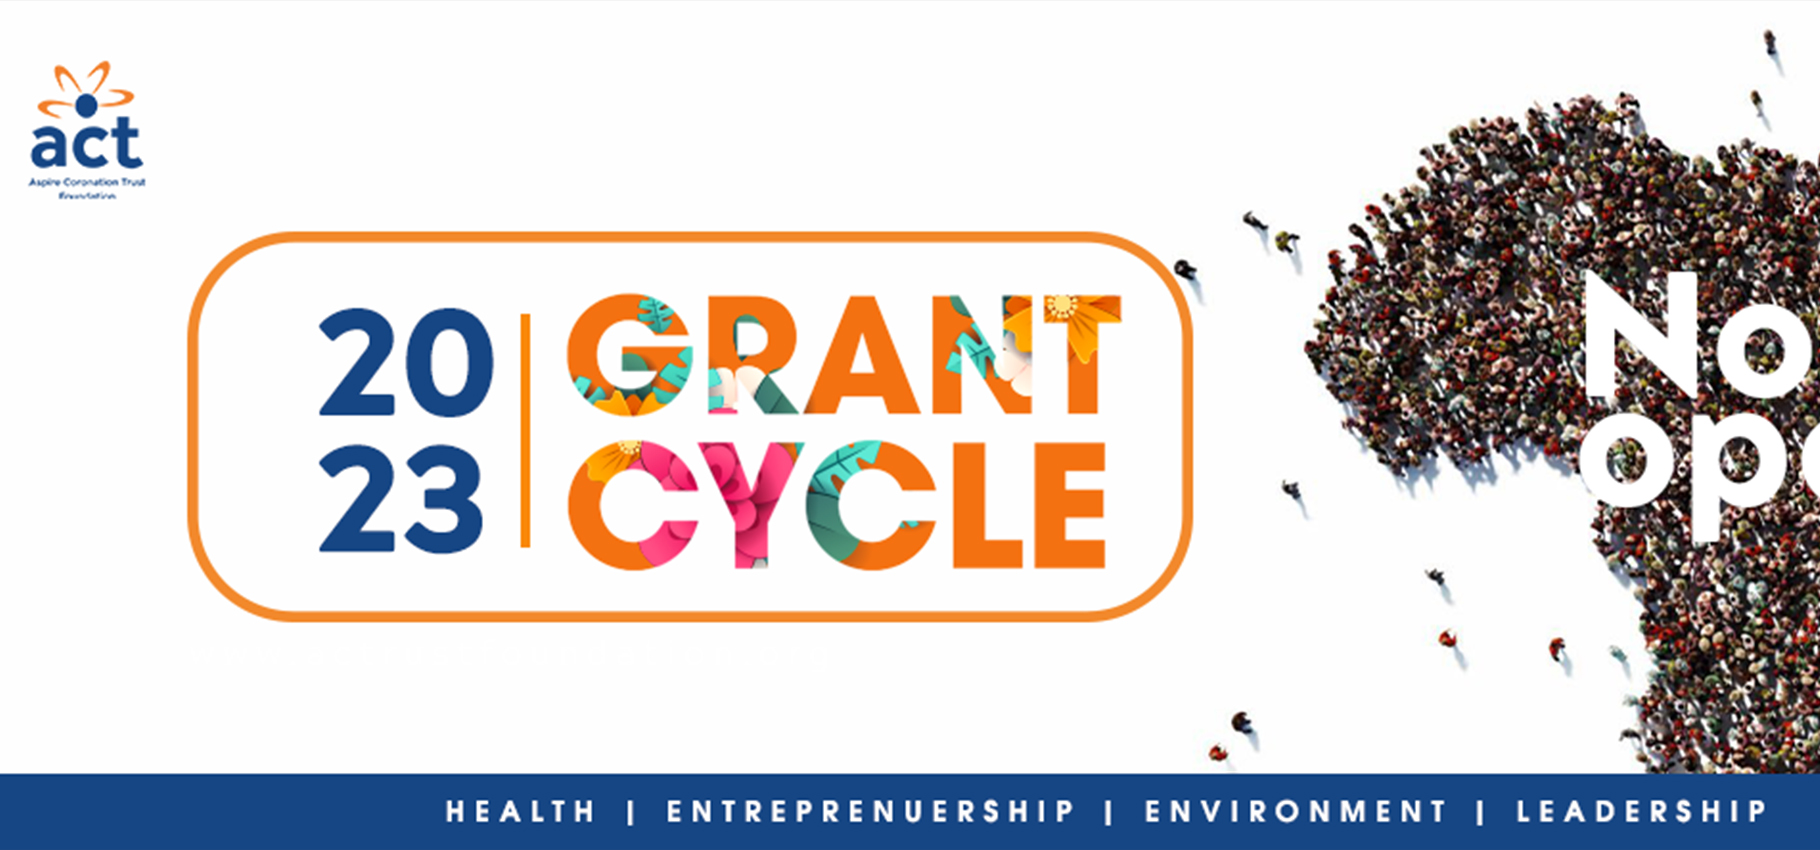 ACT Foundation 2023 Grant Cycle for Africa: Entrepreneurship, Environment, Health, Leadership